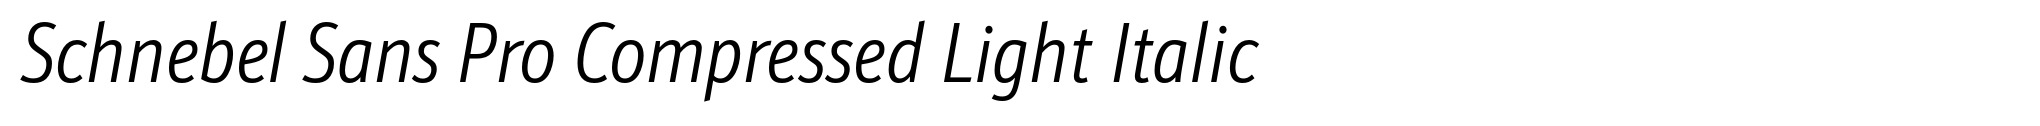 Schnebel Sans Pro Compressed Light Italic image